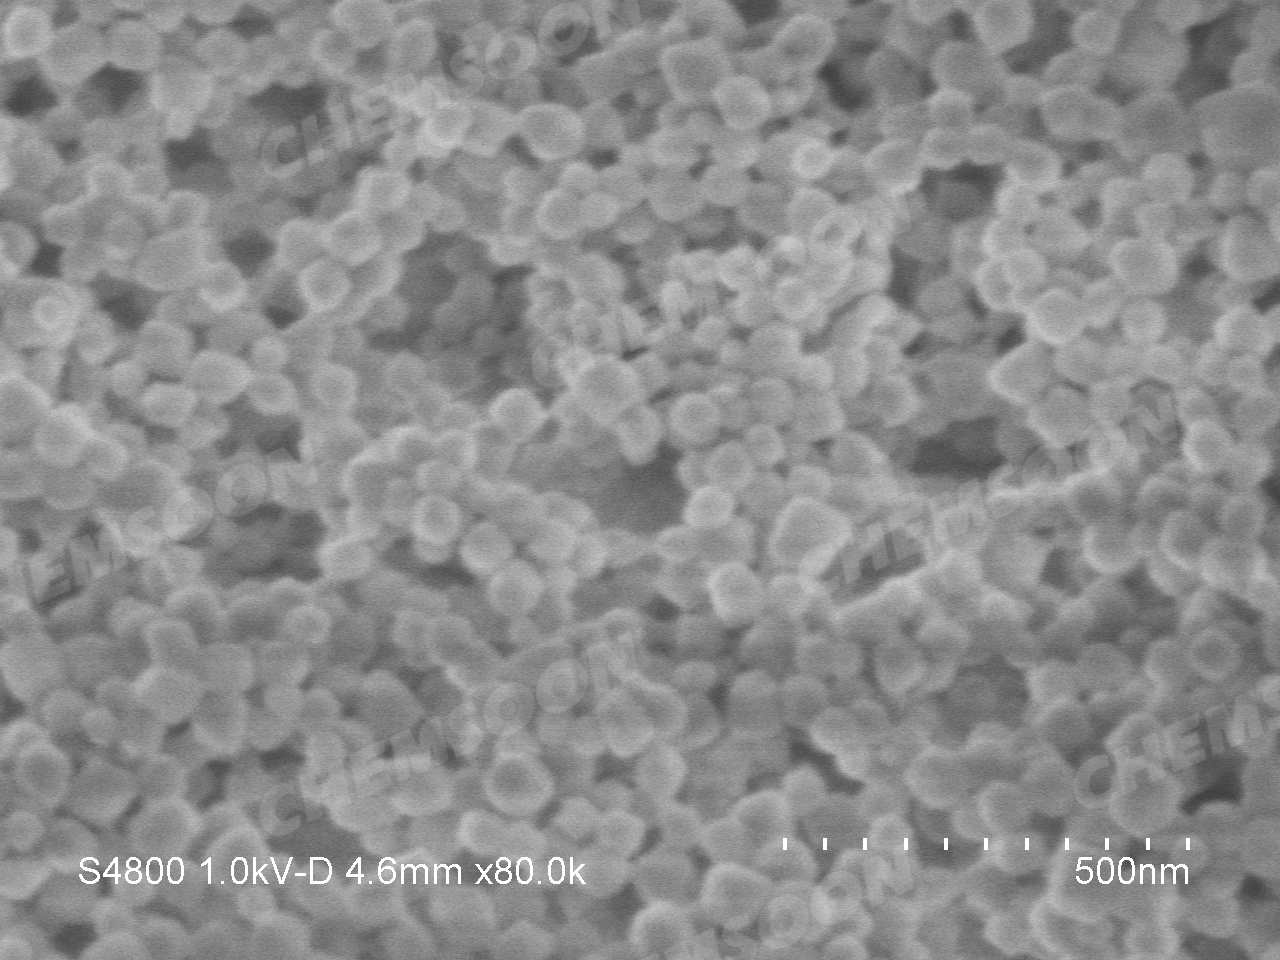 SEM-MOF-808 nanoparticles